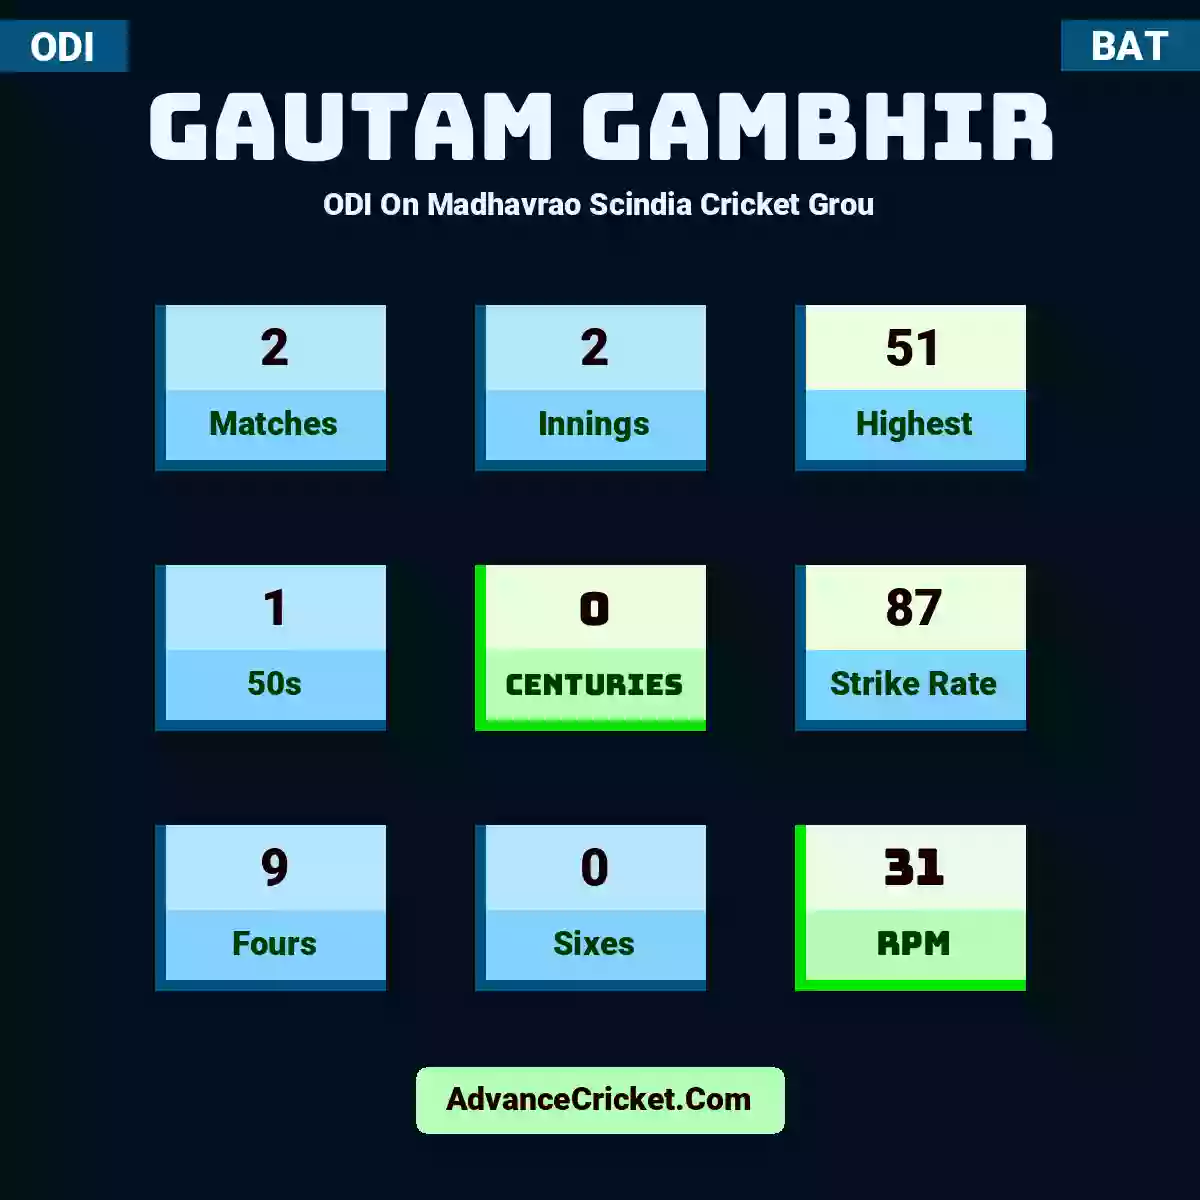 Gautam Gambhir ODI  On Madhavrao Scindia Cricket Grou, Gautam Gambhir played 2 matches, scored 51 runs as highest, 1 half-centuries, and 0 centuries, with a strike rate of 87. G.Gambhir hit 9 fours and 0 sixes, with an RPM of 31.